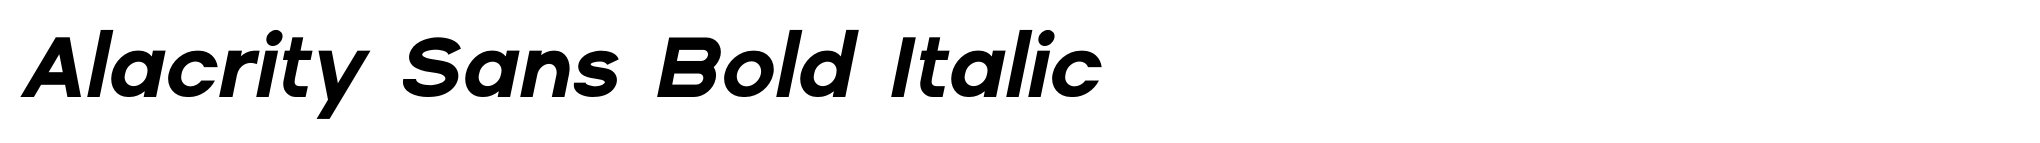 Alacrity Sans Bold Italic image